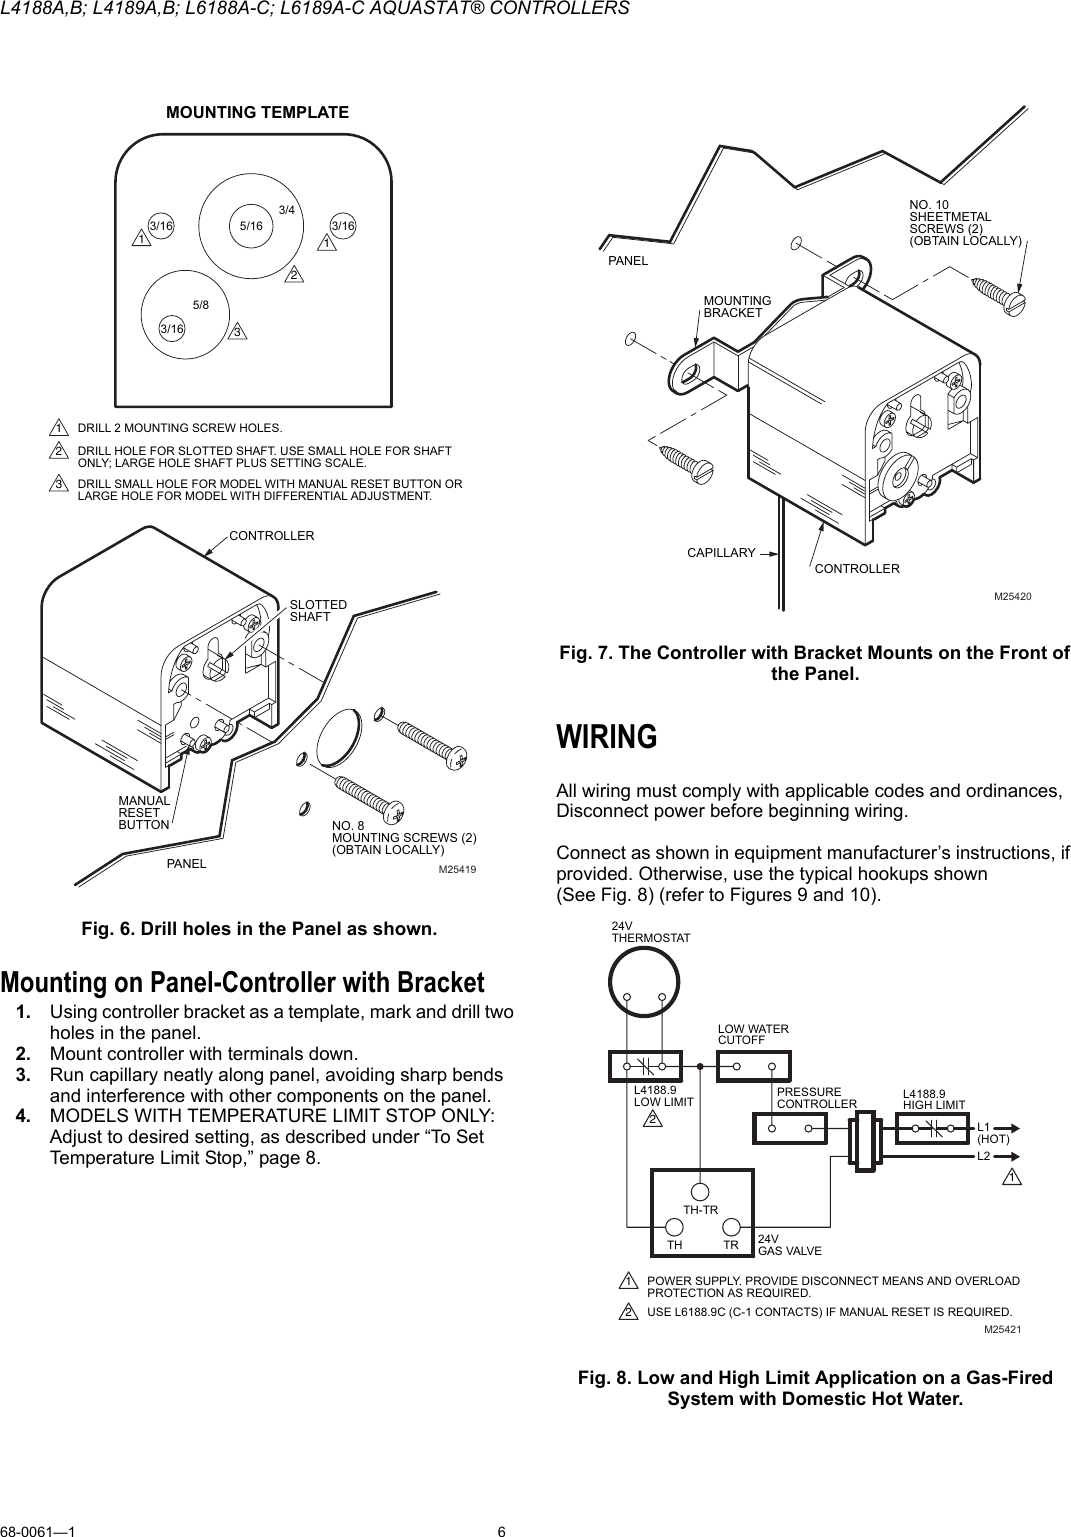 Page 6 of 8 - Honeywell Honeywell-Aquastat-L6188A-C-Users-Manual- 68-0061-1 - L4188A,B; L4189A,B; L6188A-C; L6189A-C Aquastat® Controllers  Honeywell-aquastat-l6188a-c-users-manual